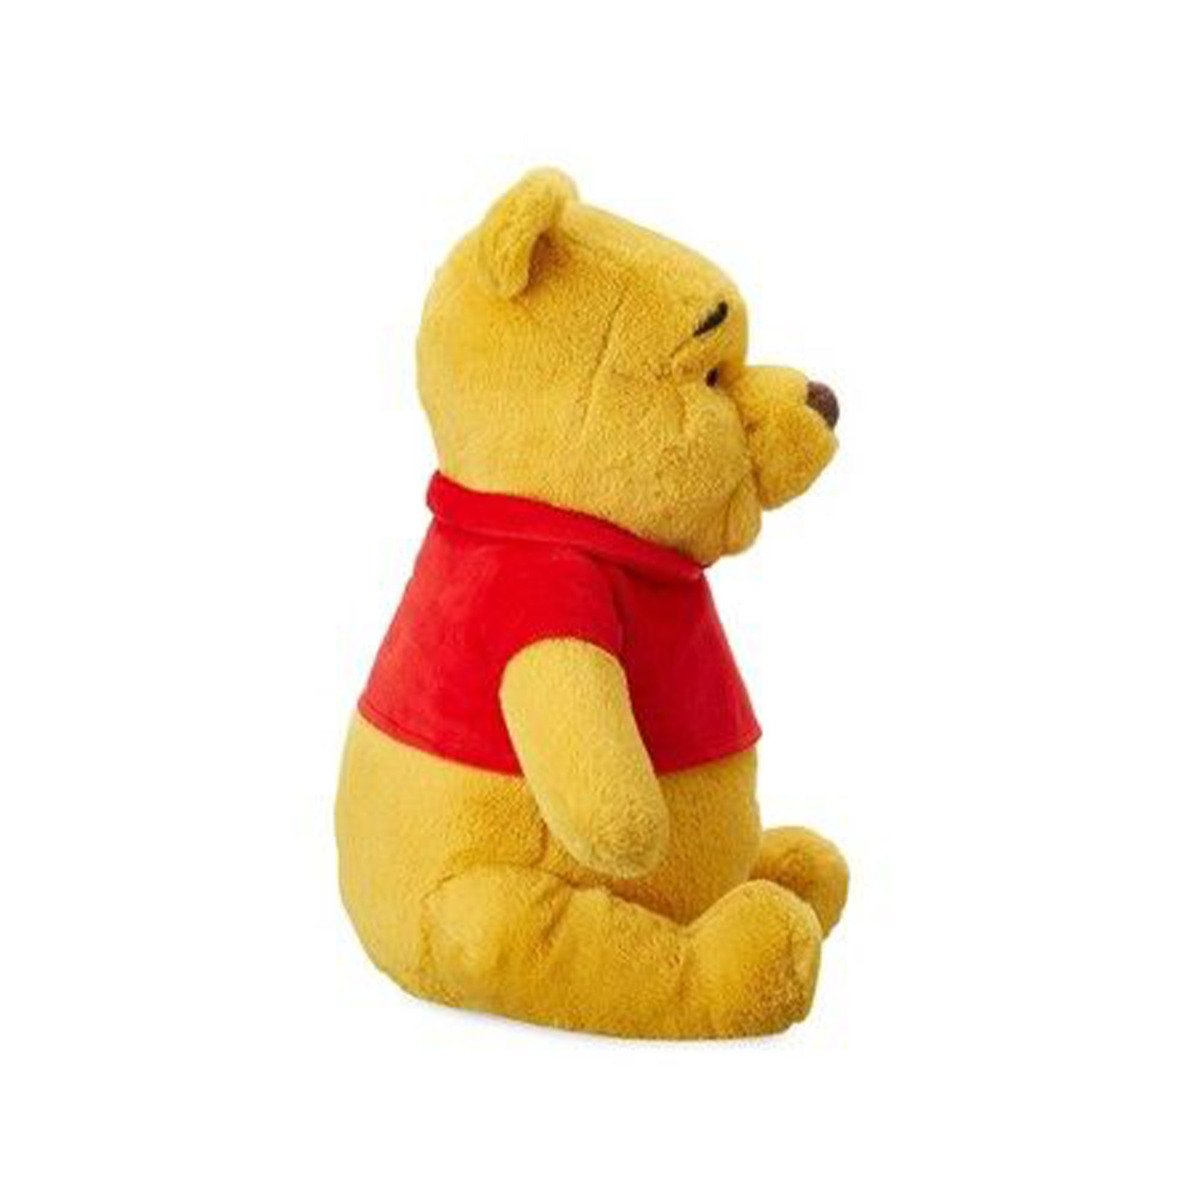 Winnie The Pooh Soft Toy 100043